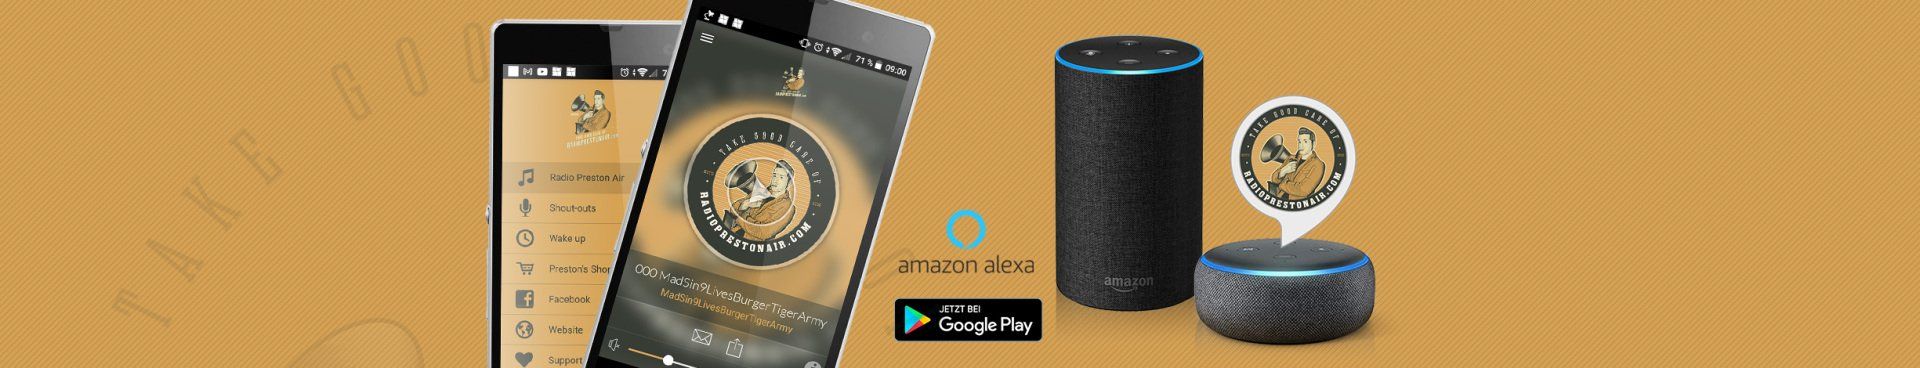 Desktop Teaser Radio Preston Air empfangen über Android App und Alexa Skill